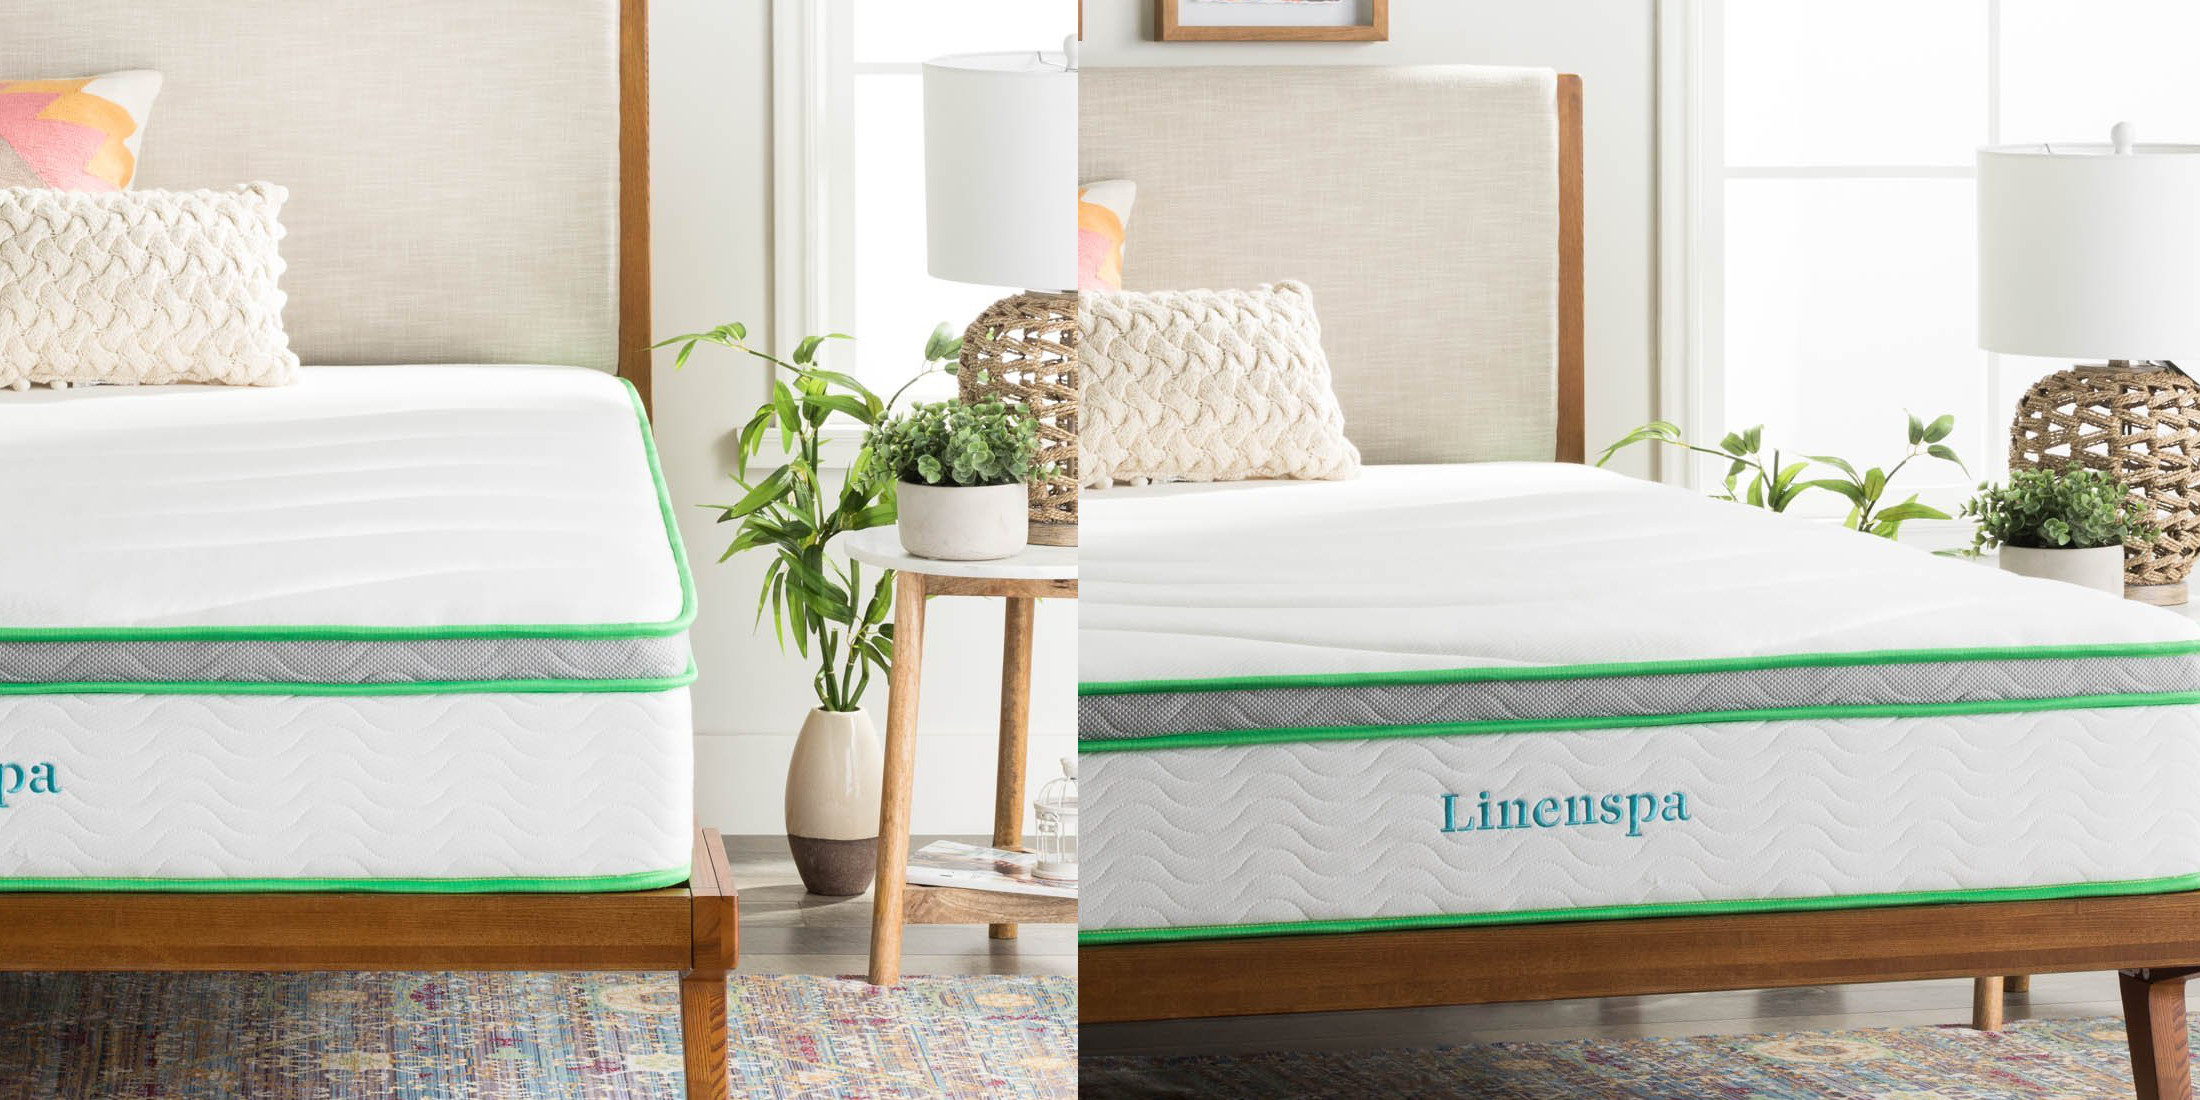 linenspa 10 inch hybrid mattress twin